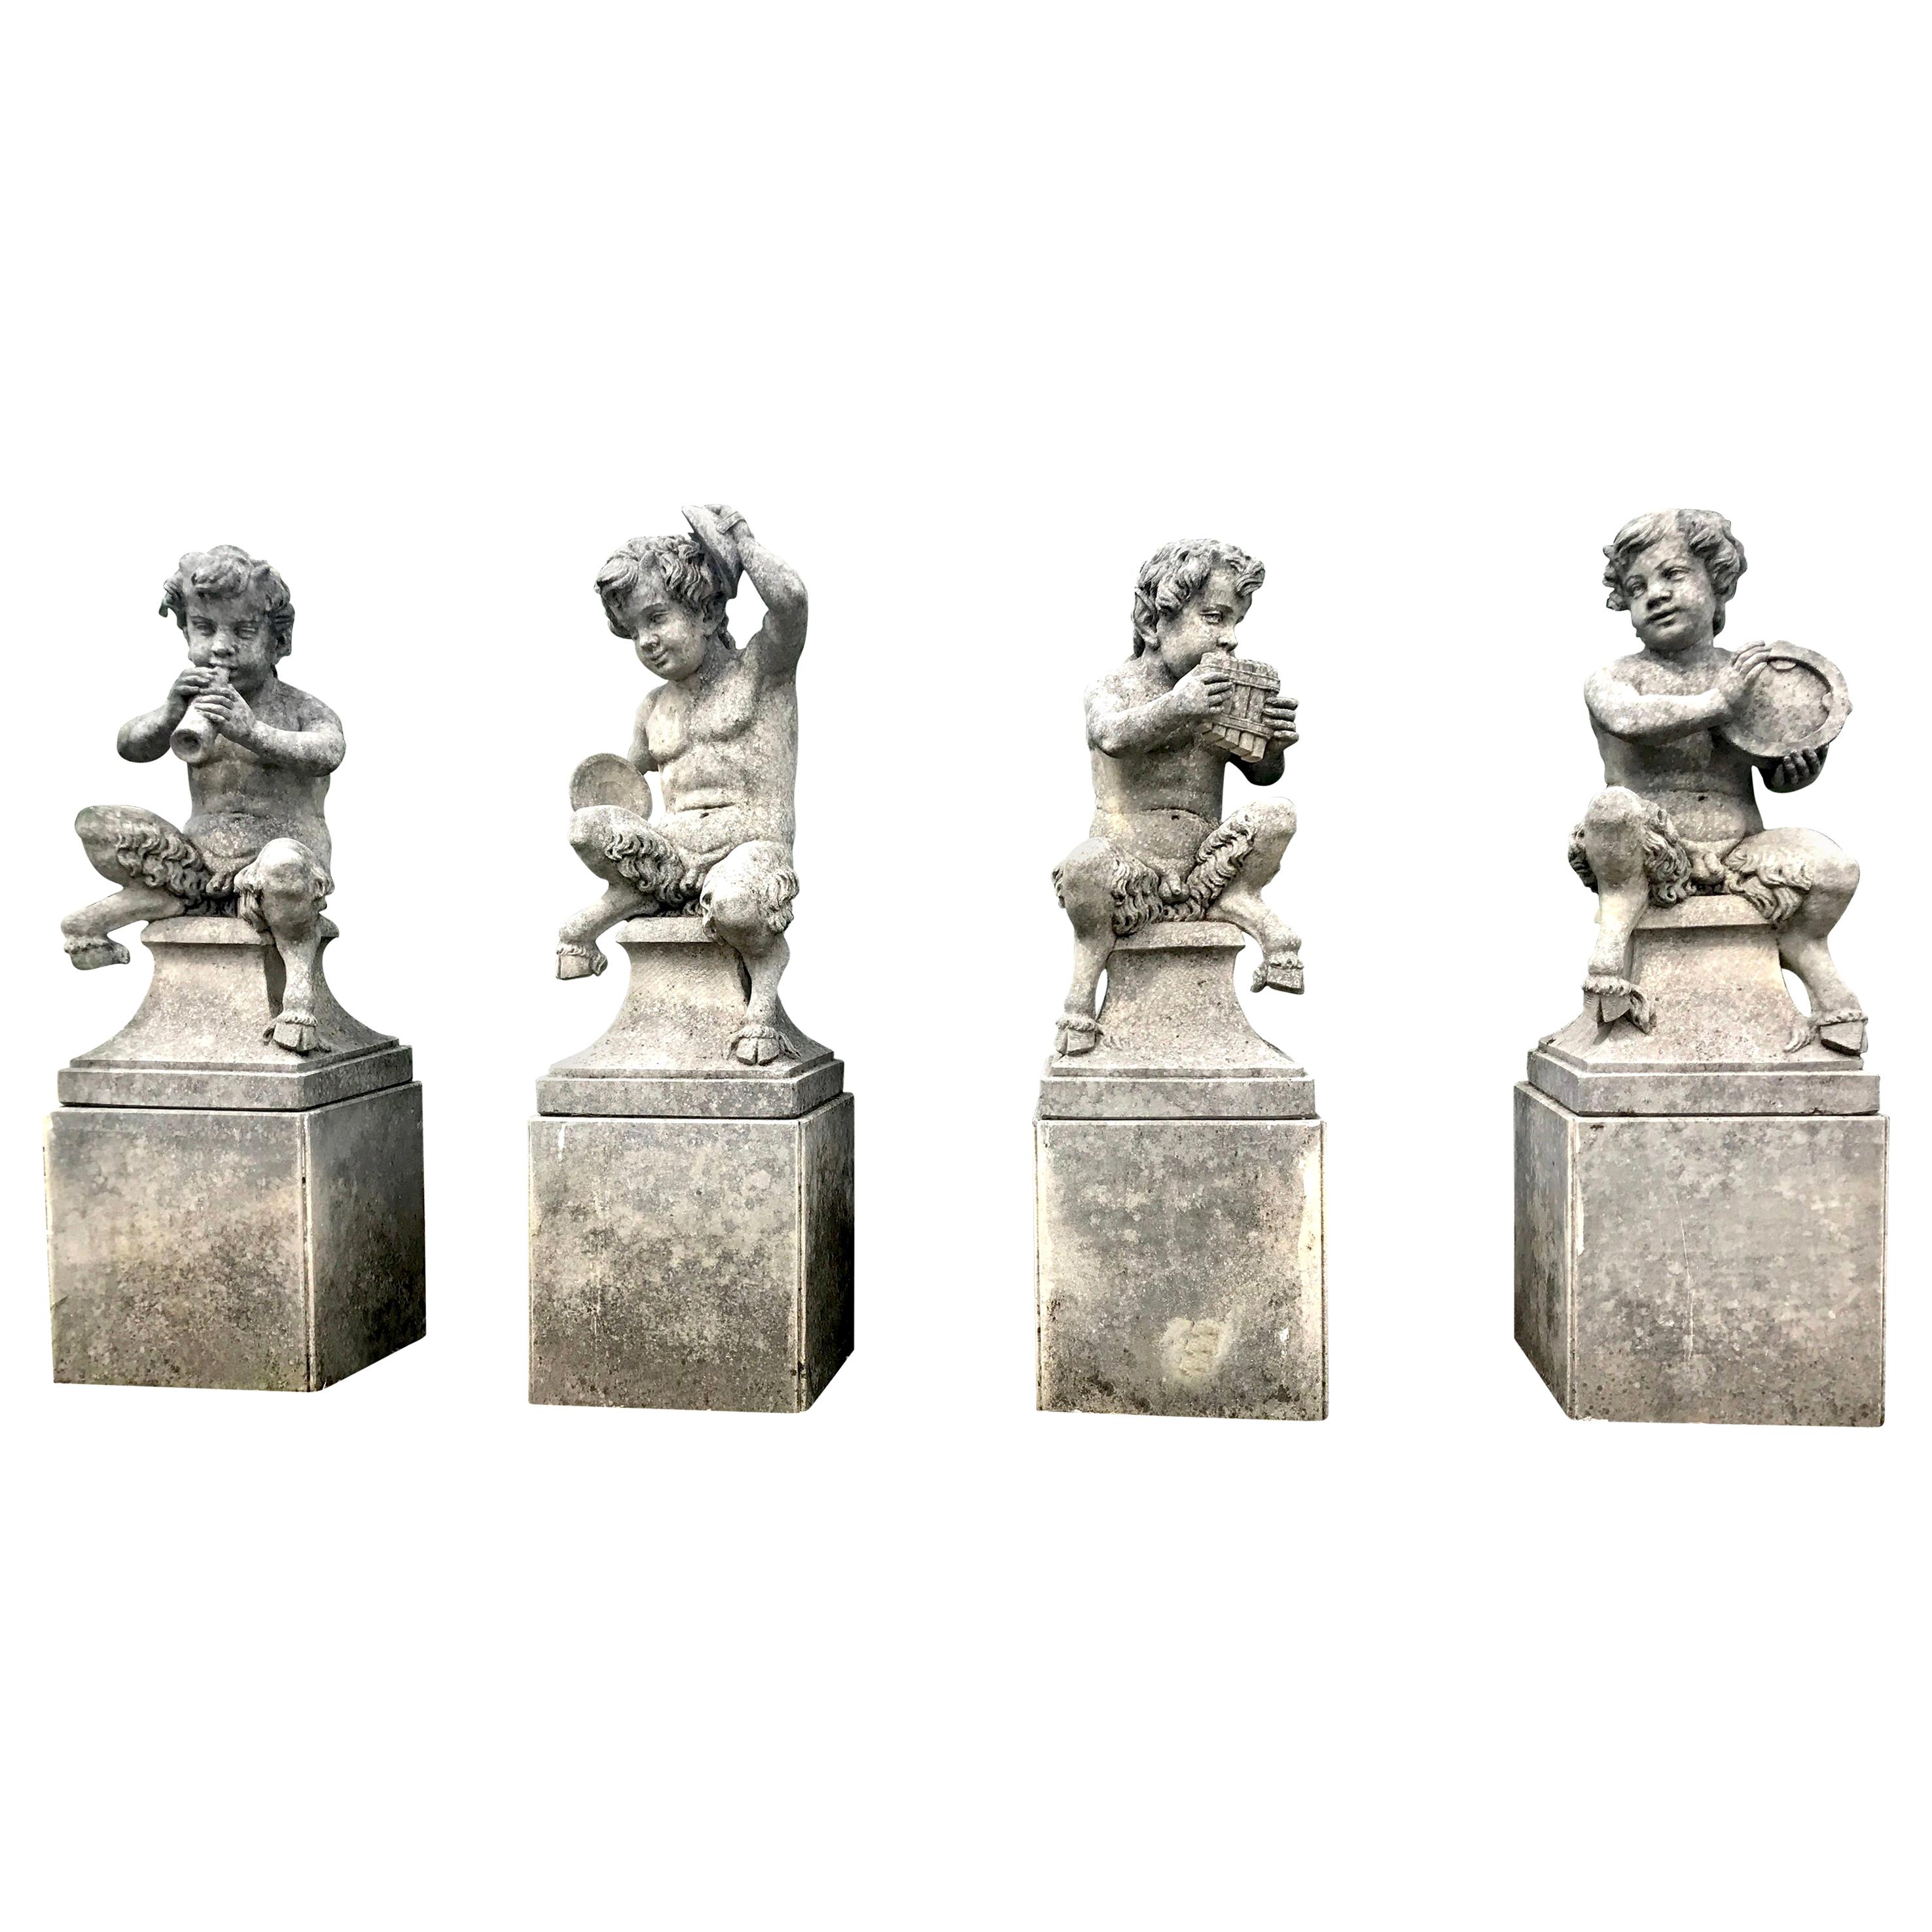 Four Italian Fauns Stone Garden Statues Representing Musicians